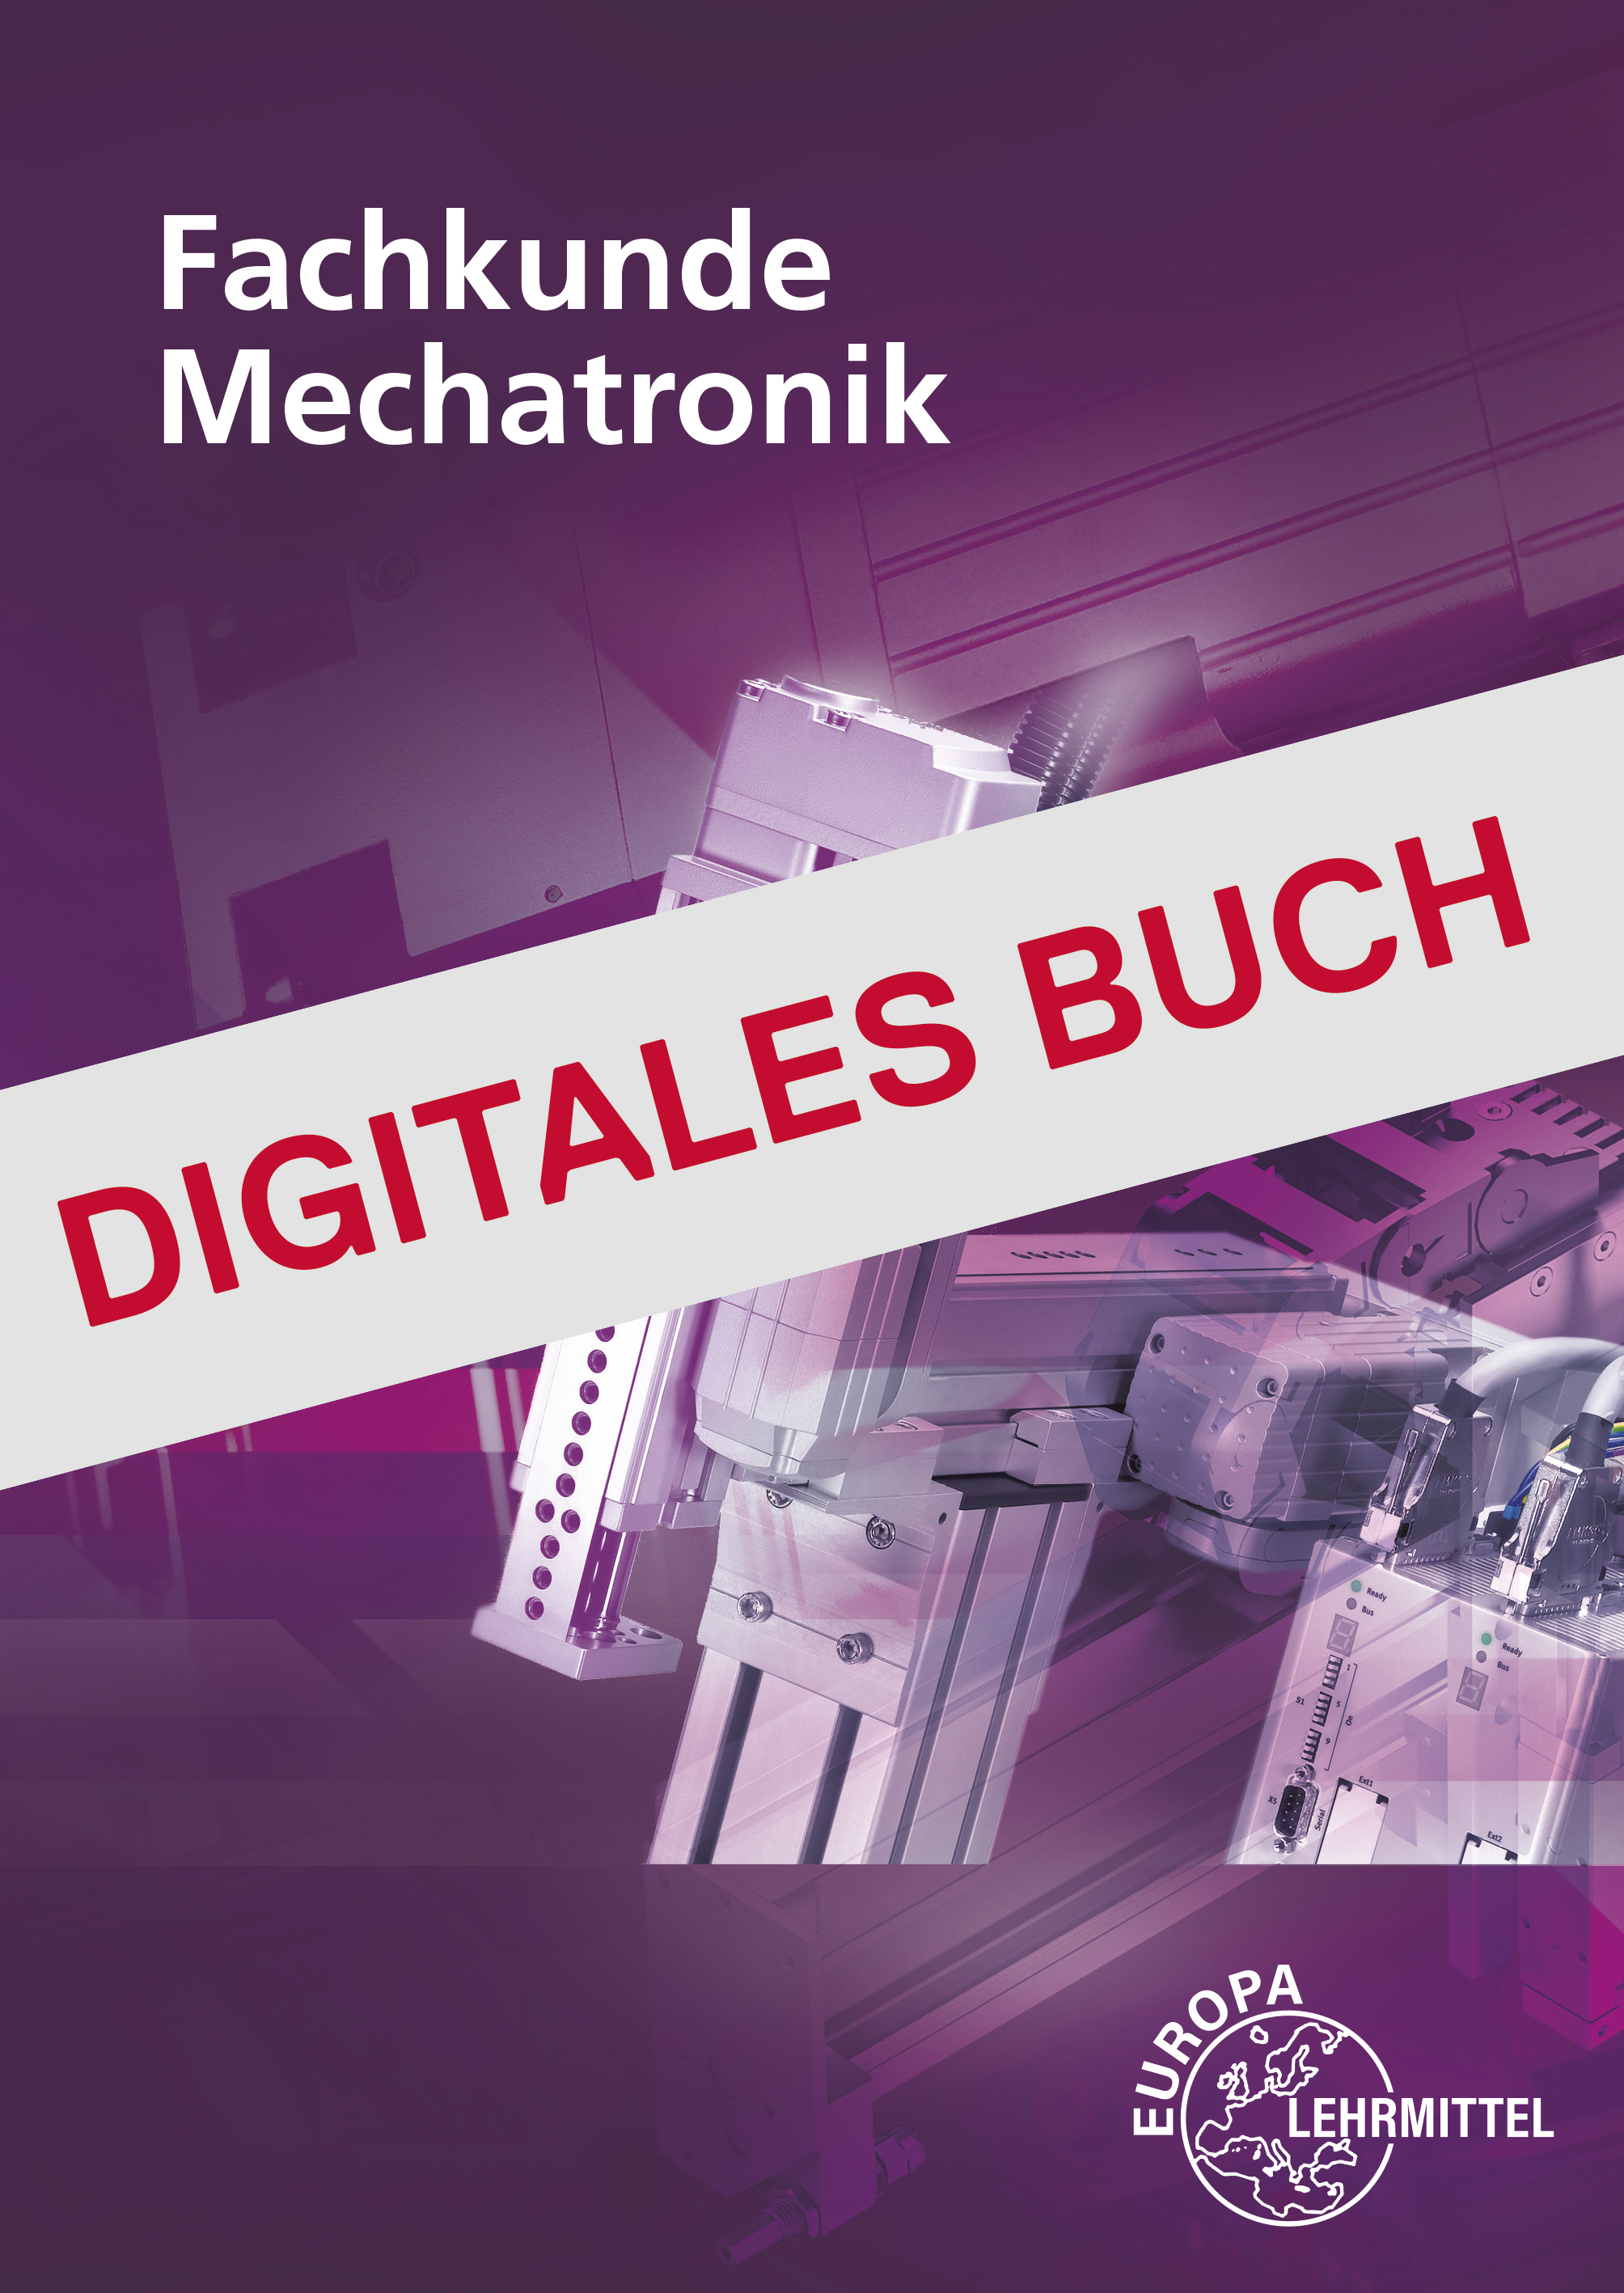 Fachkunde Mechatronik - Digitales Buch